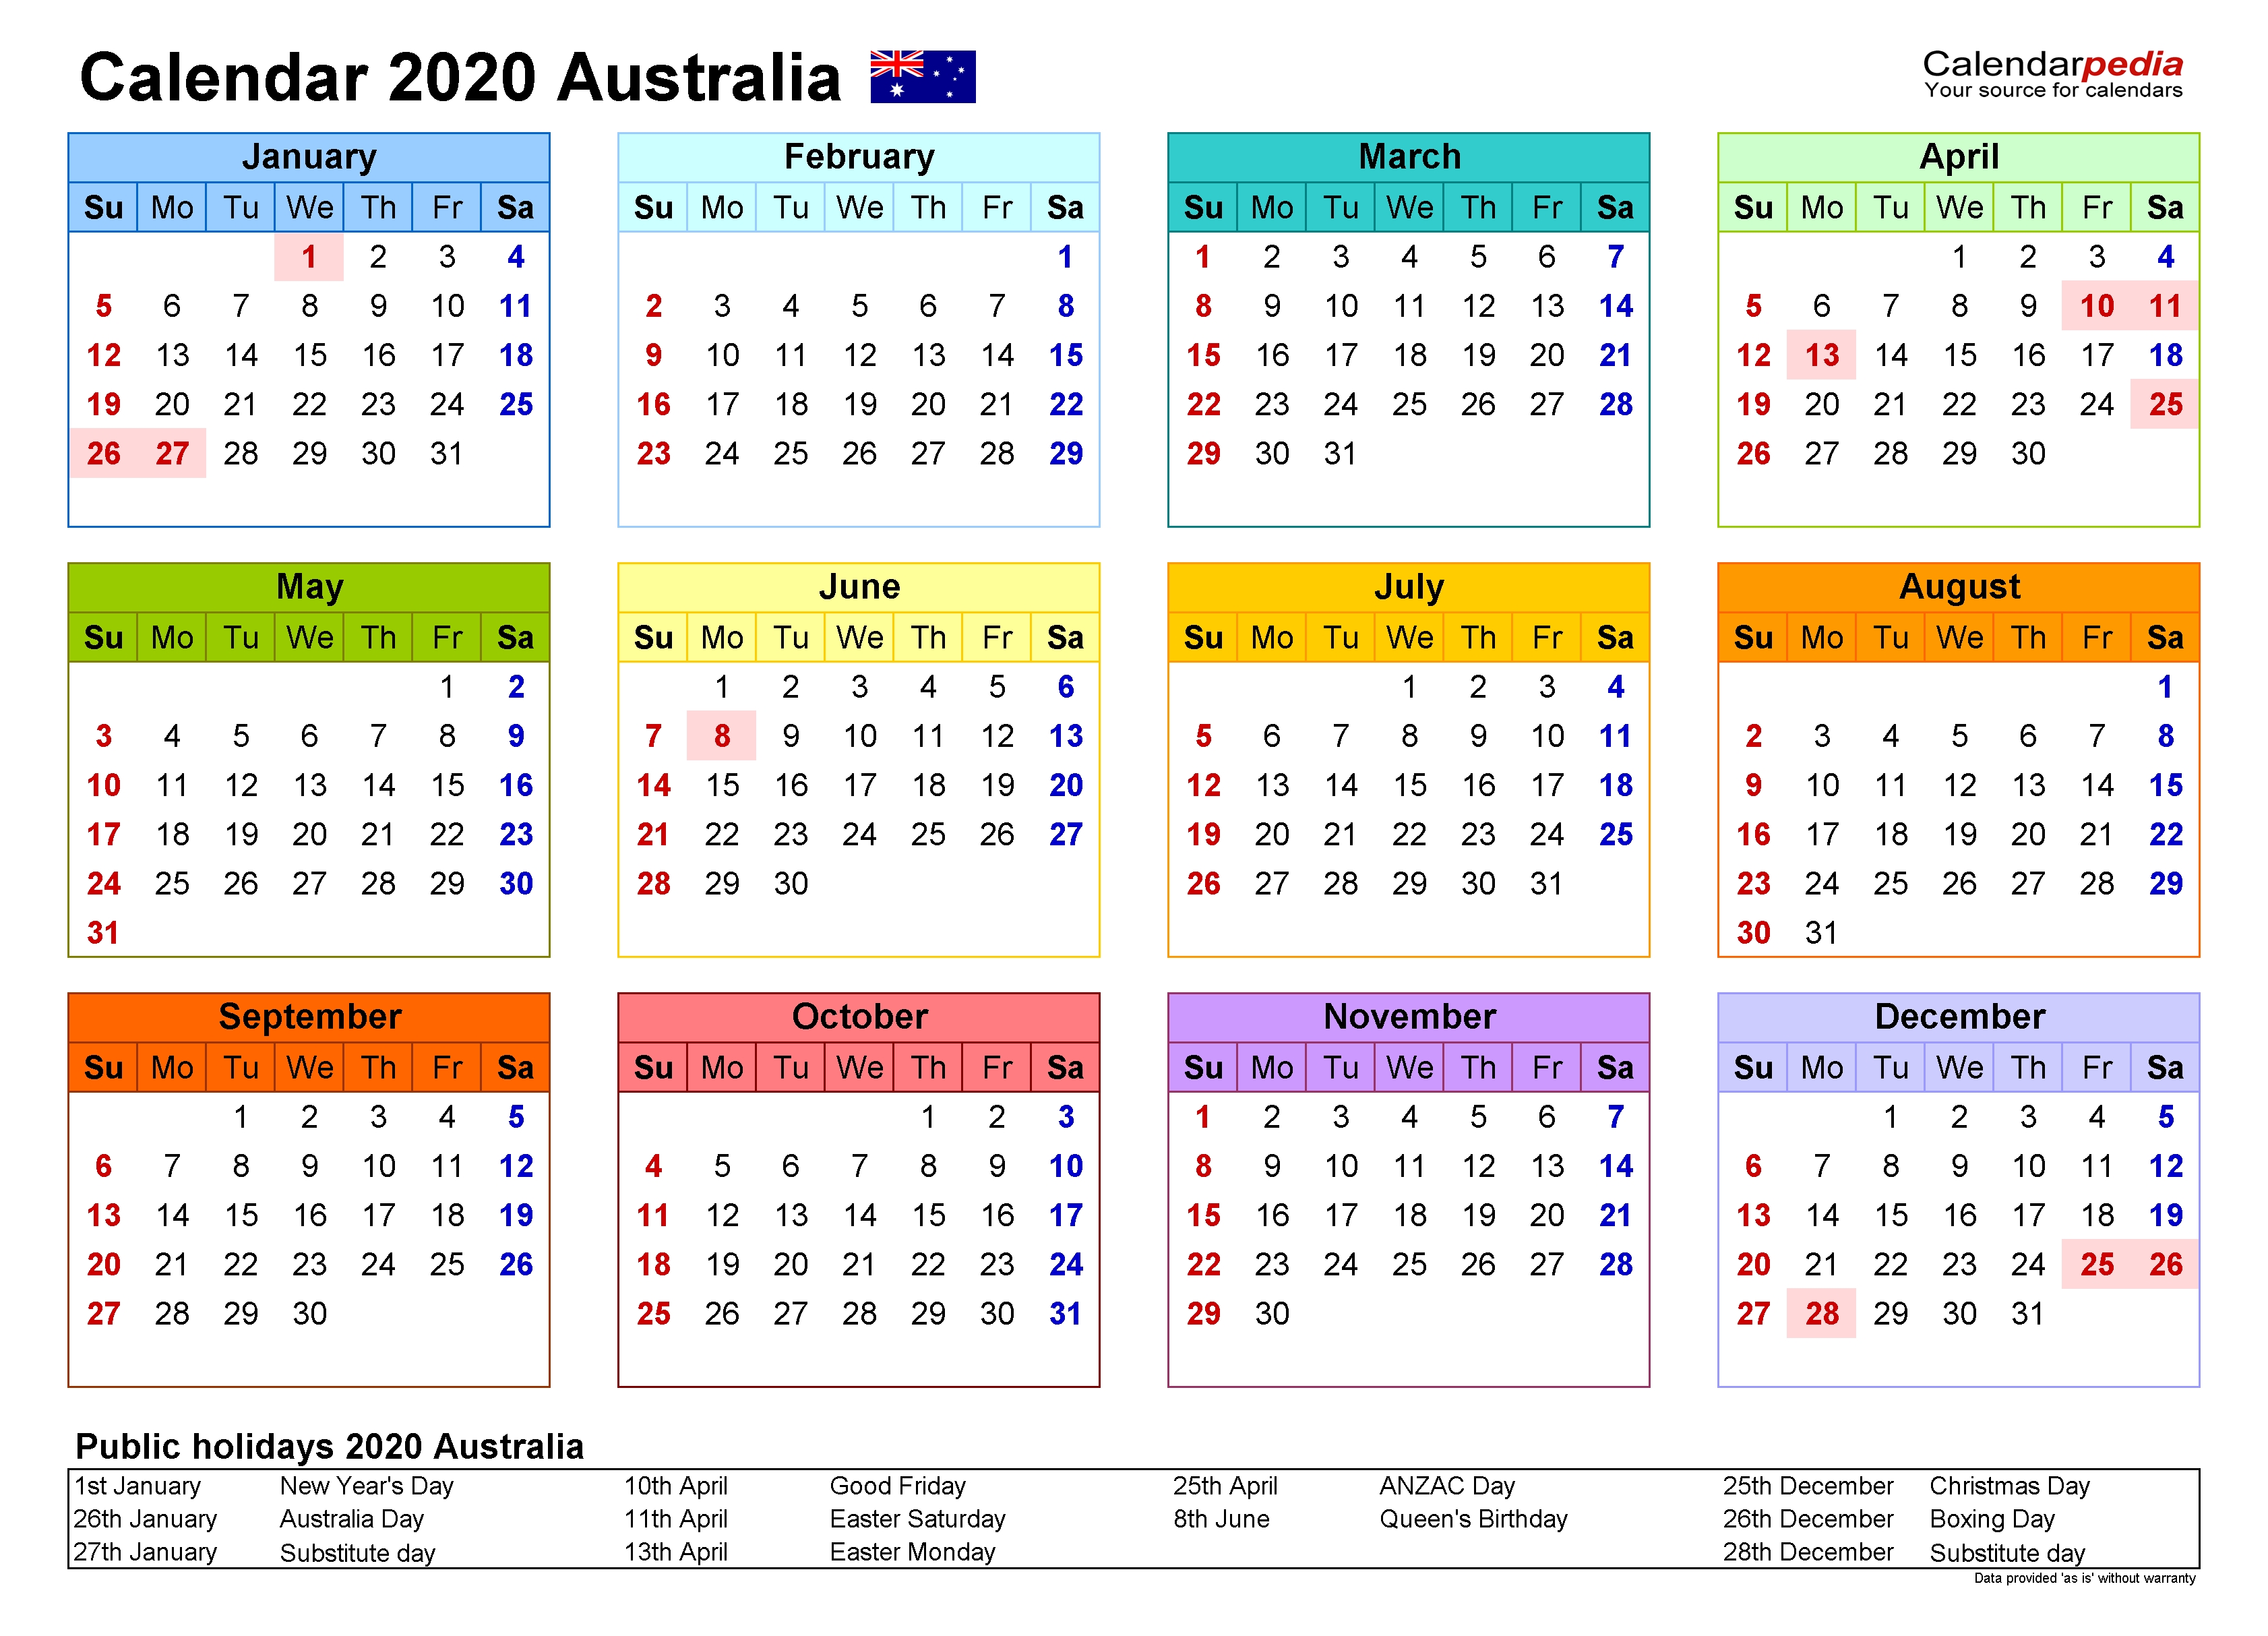 Financial Calendar Template Australia 2020-2020 | Calendar ...